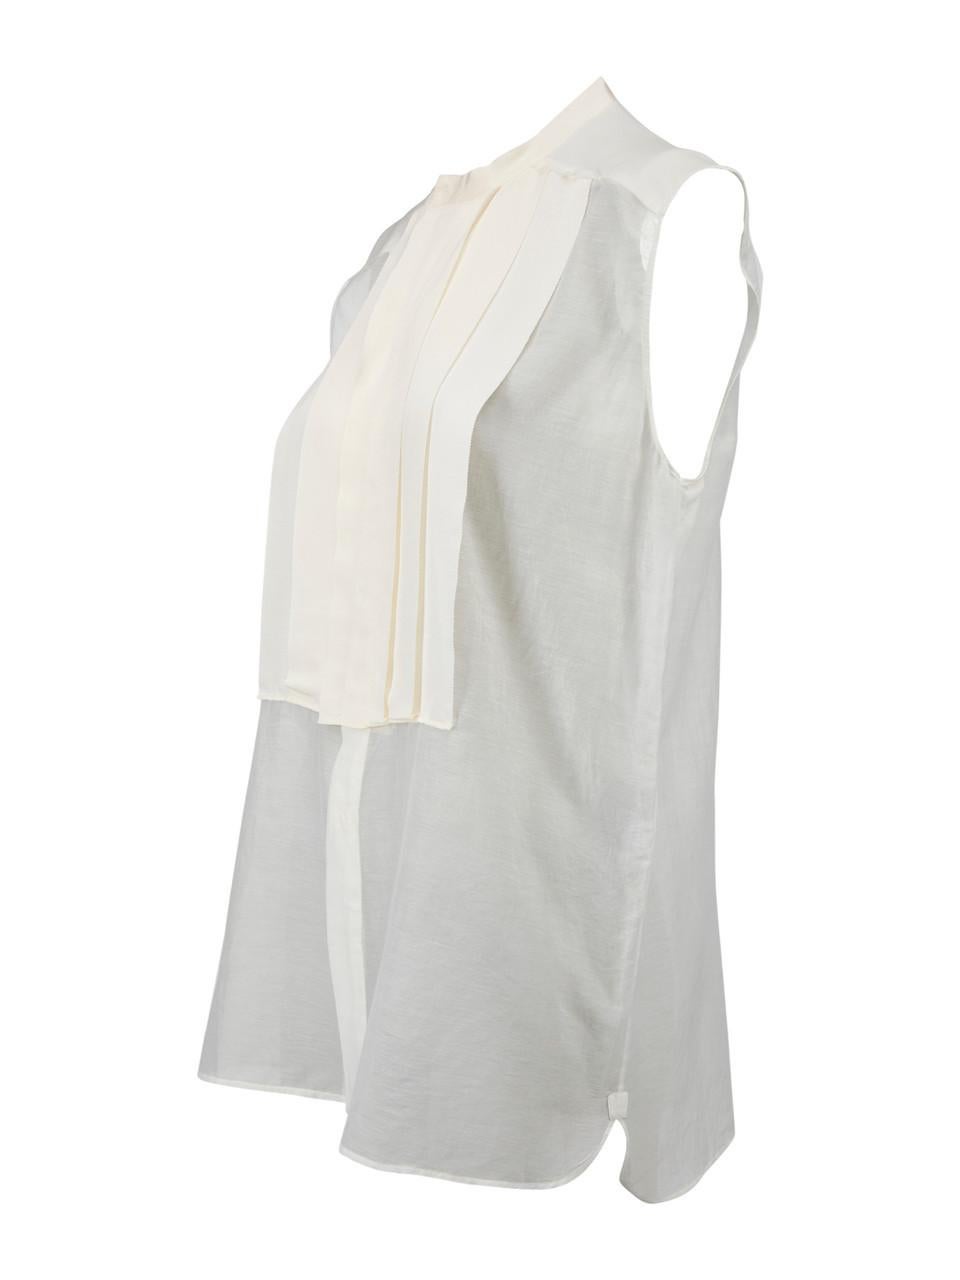 Pre-Loved Lanvin Women's White Sleeveless Button Up Blouse 1